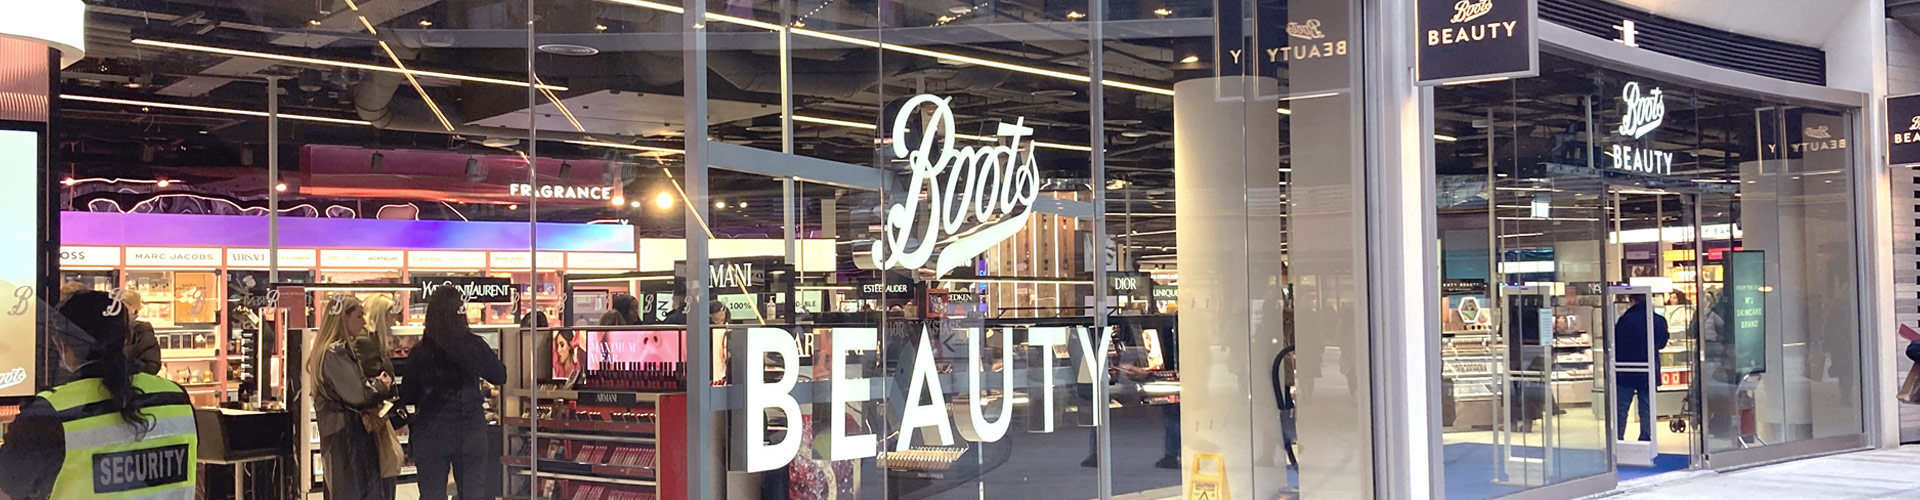 Boots Beauty Retail Safari main banner of storefront